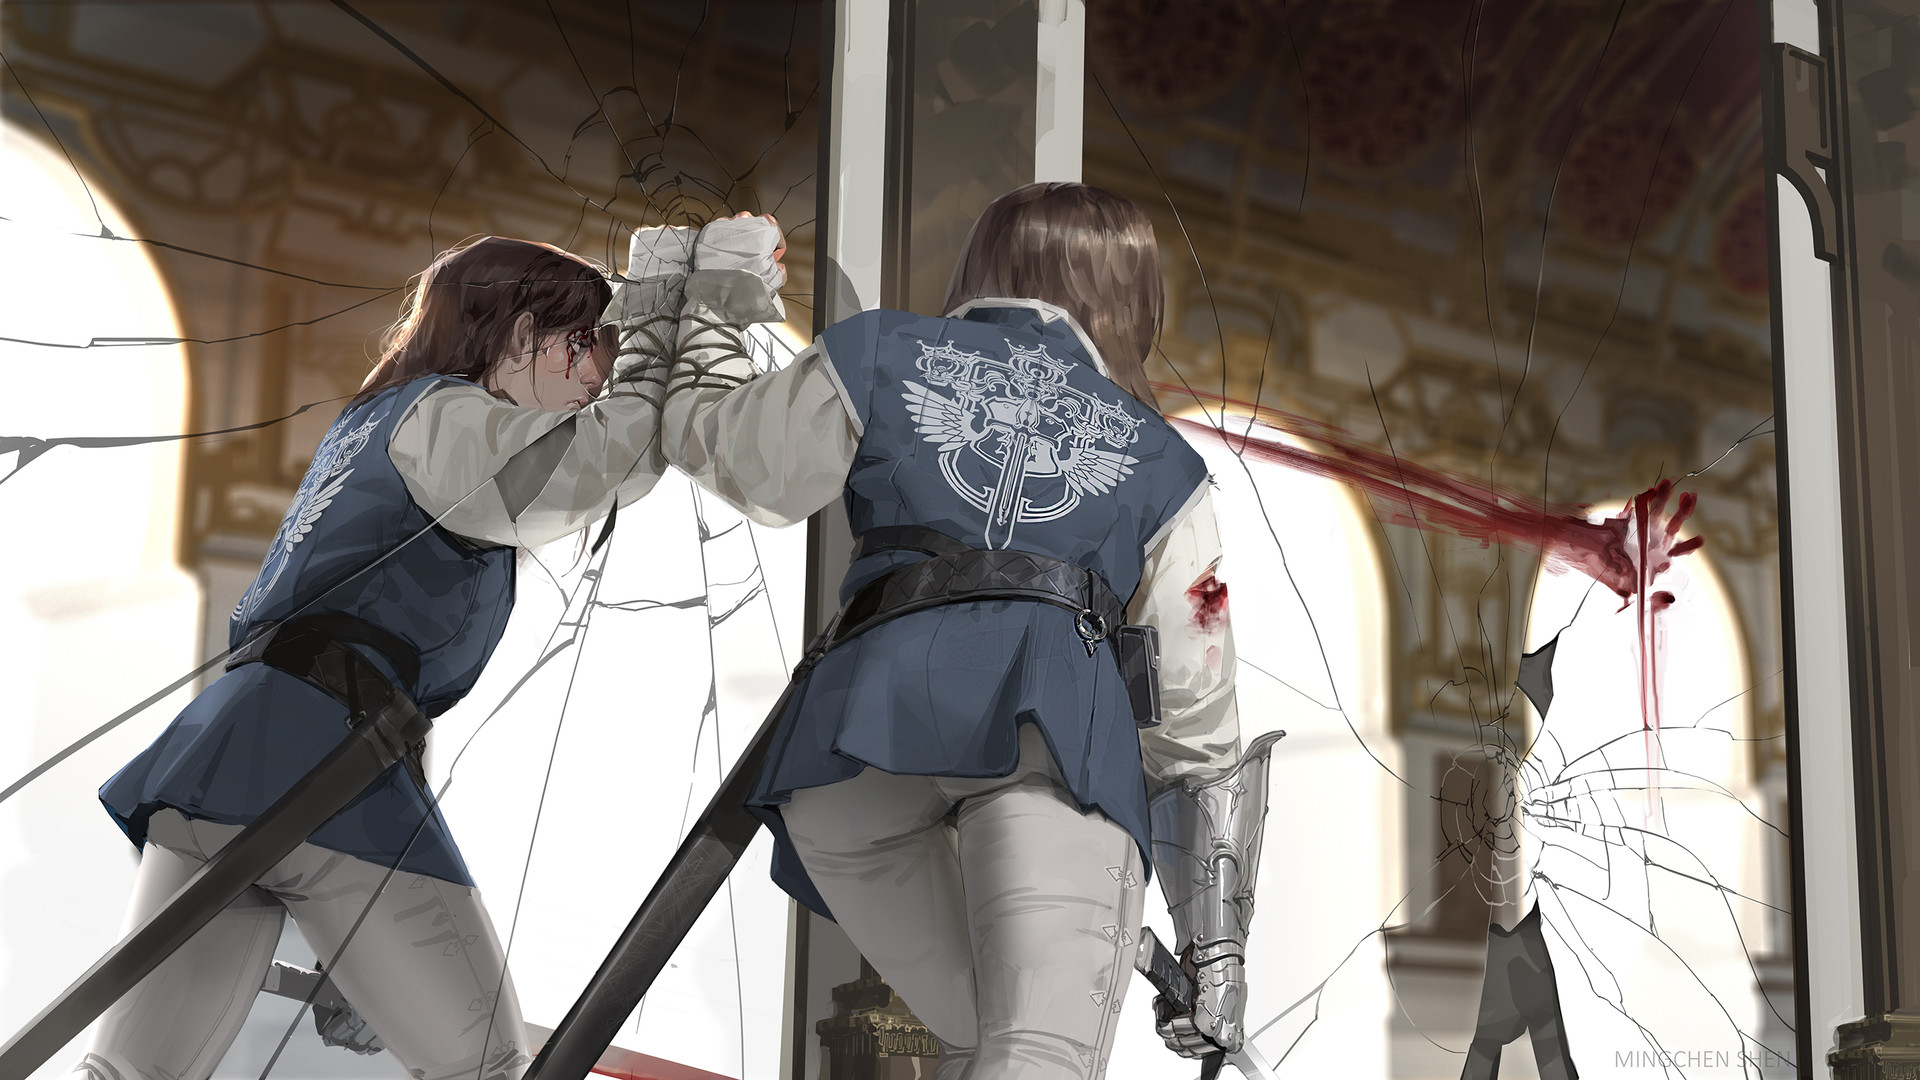 General 1920x1080 mirror palace blood reflection sword gauntlets fantasy art women cracked